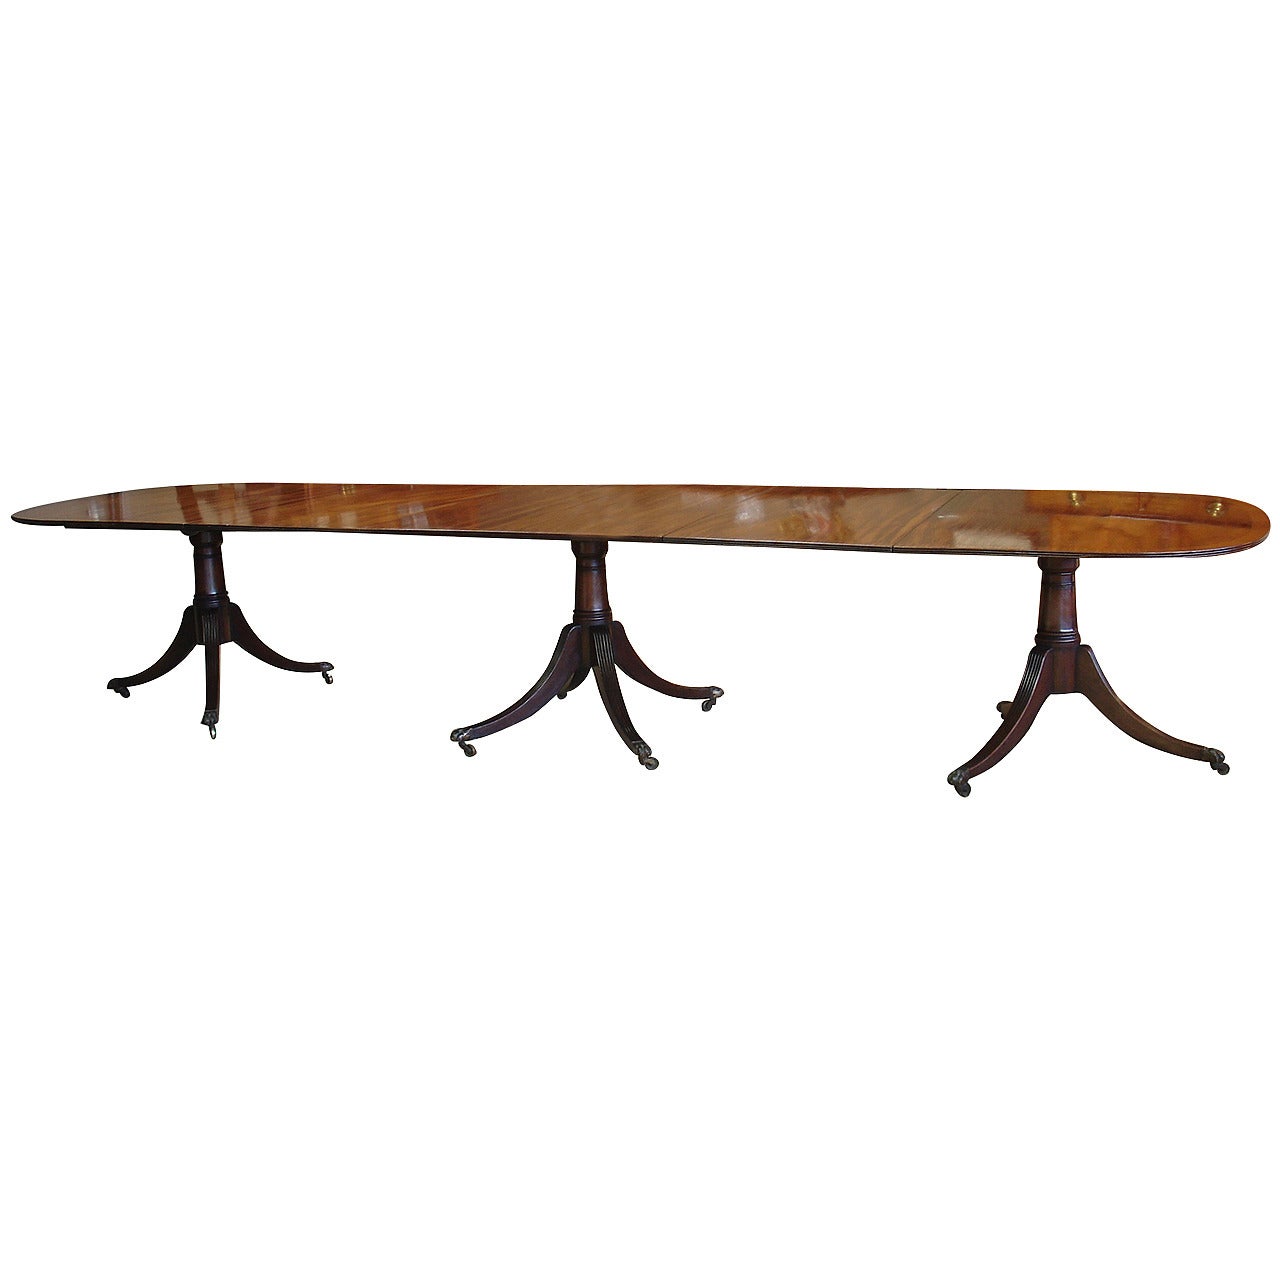 Late George III or Regency Period Mahogany Triple Pedestal Dining Table